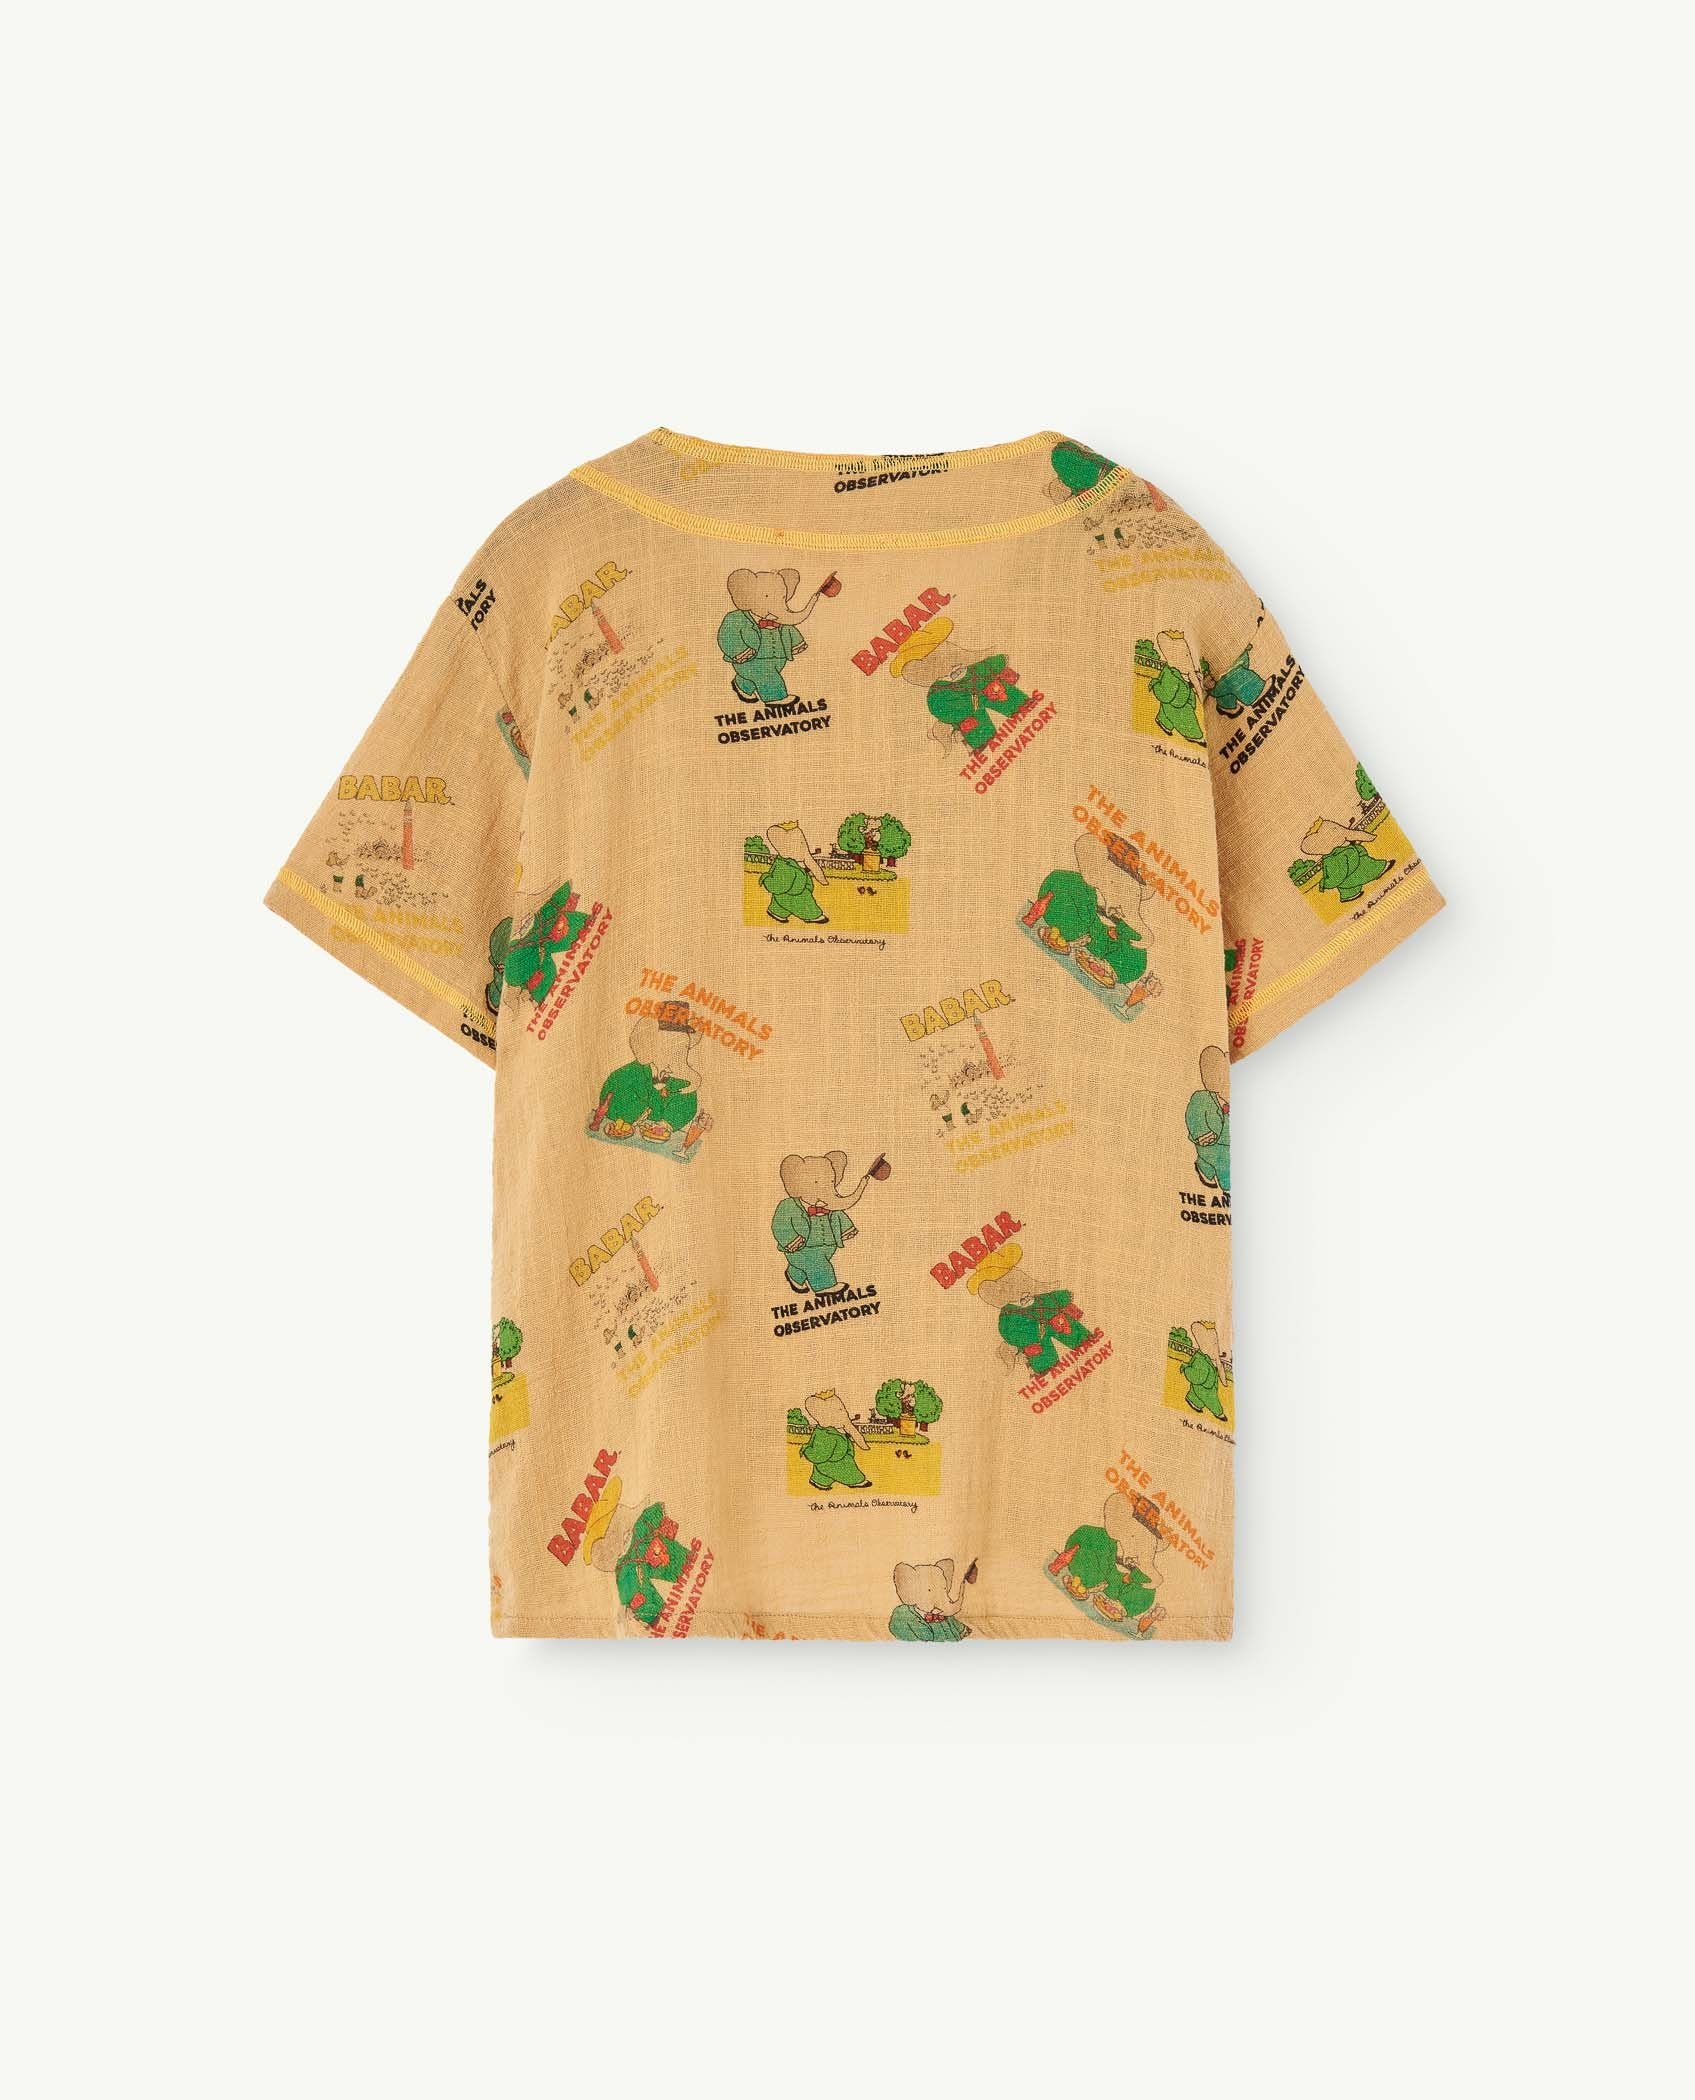 Babar Brown Kangaroo Shirt PRODUCT BACK